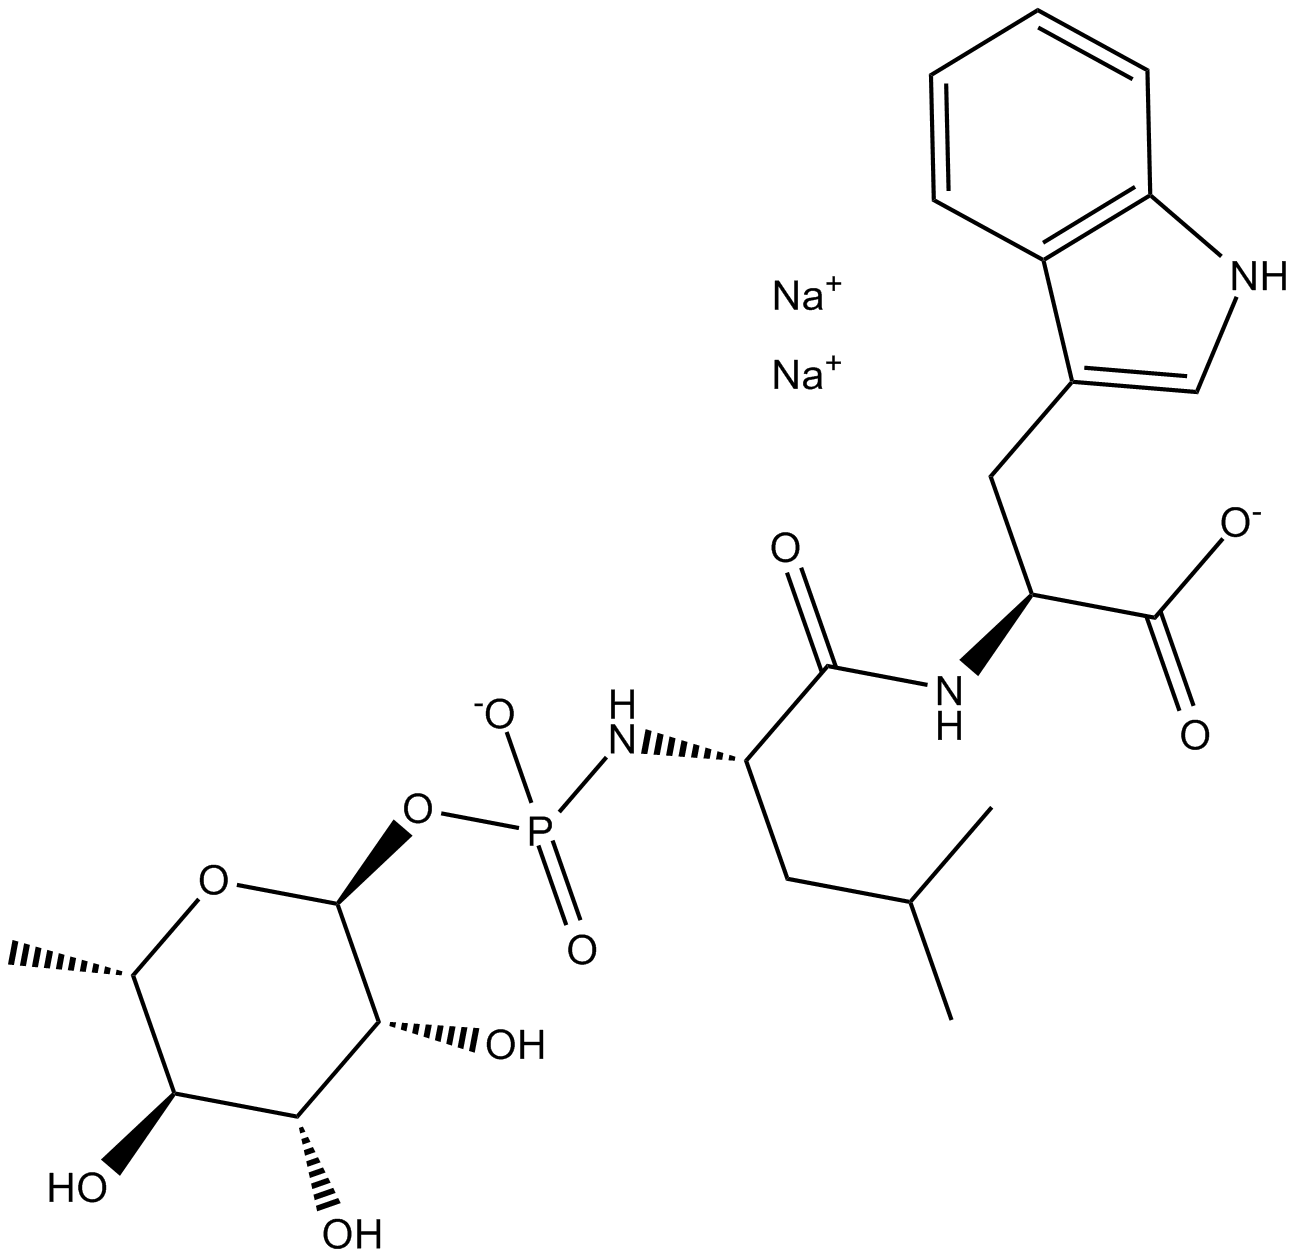 Phosphoramidon Disodium Salt